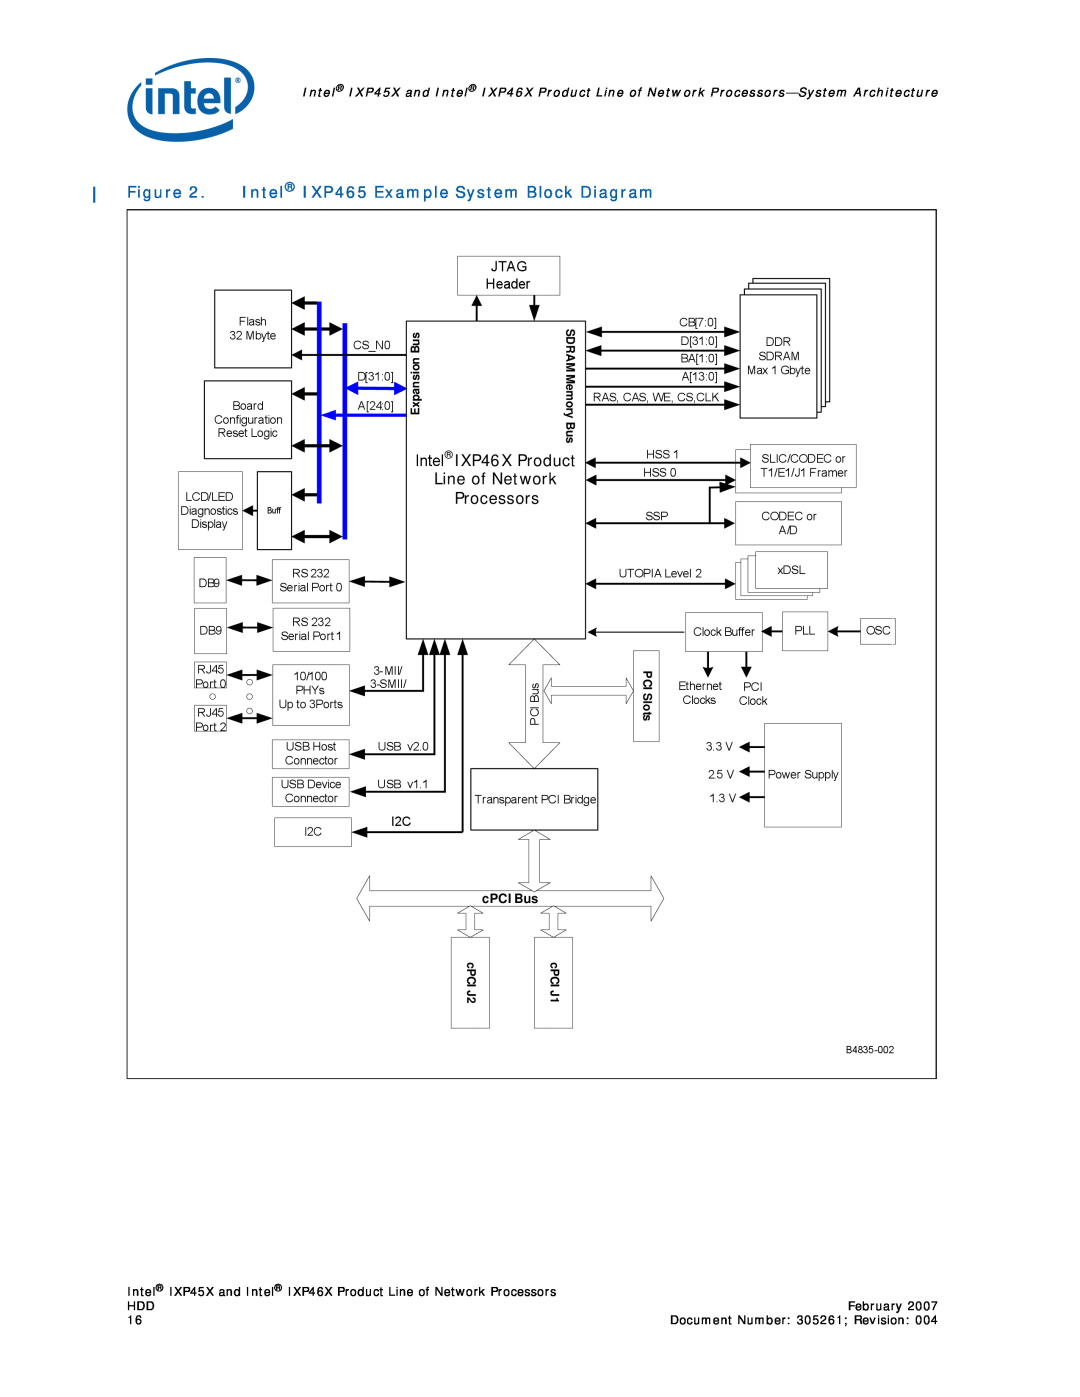 Intel IXP45X manual Jtag, IntelIXP46X Product, Line of Network, Processors, cPCI Bus 